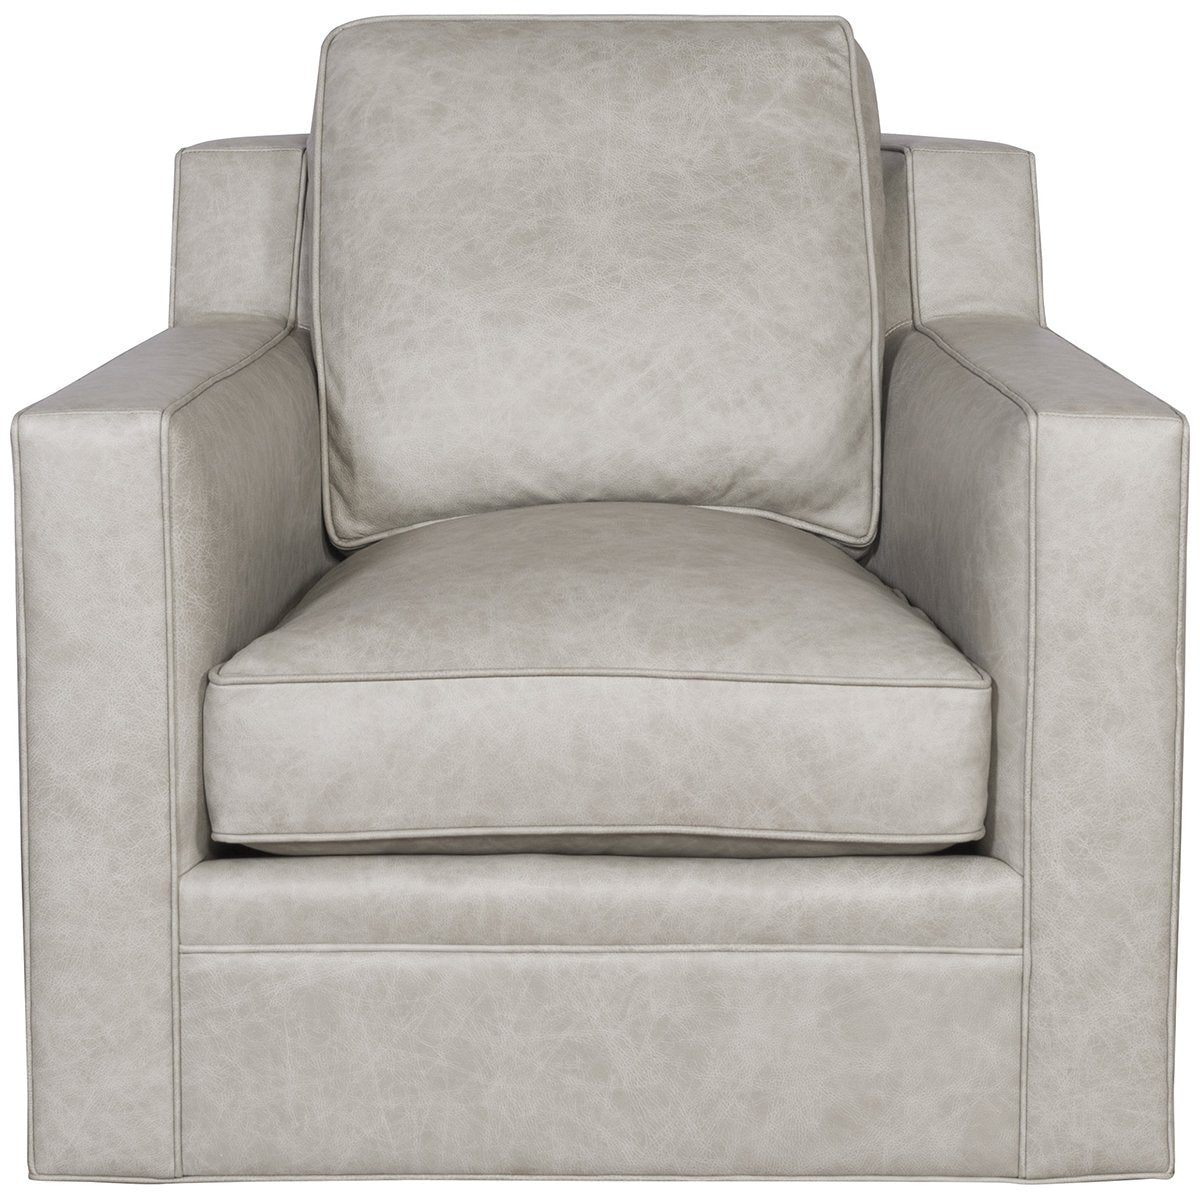 Vanguard Furniture Hillcrest Barrel Back Swivel Chair